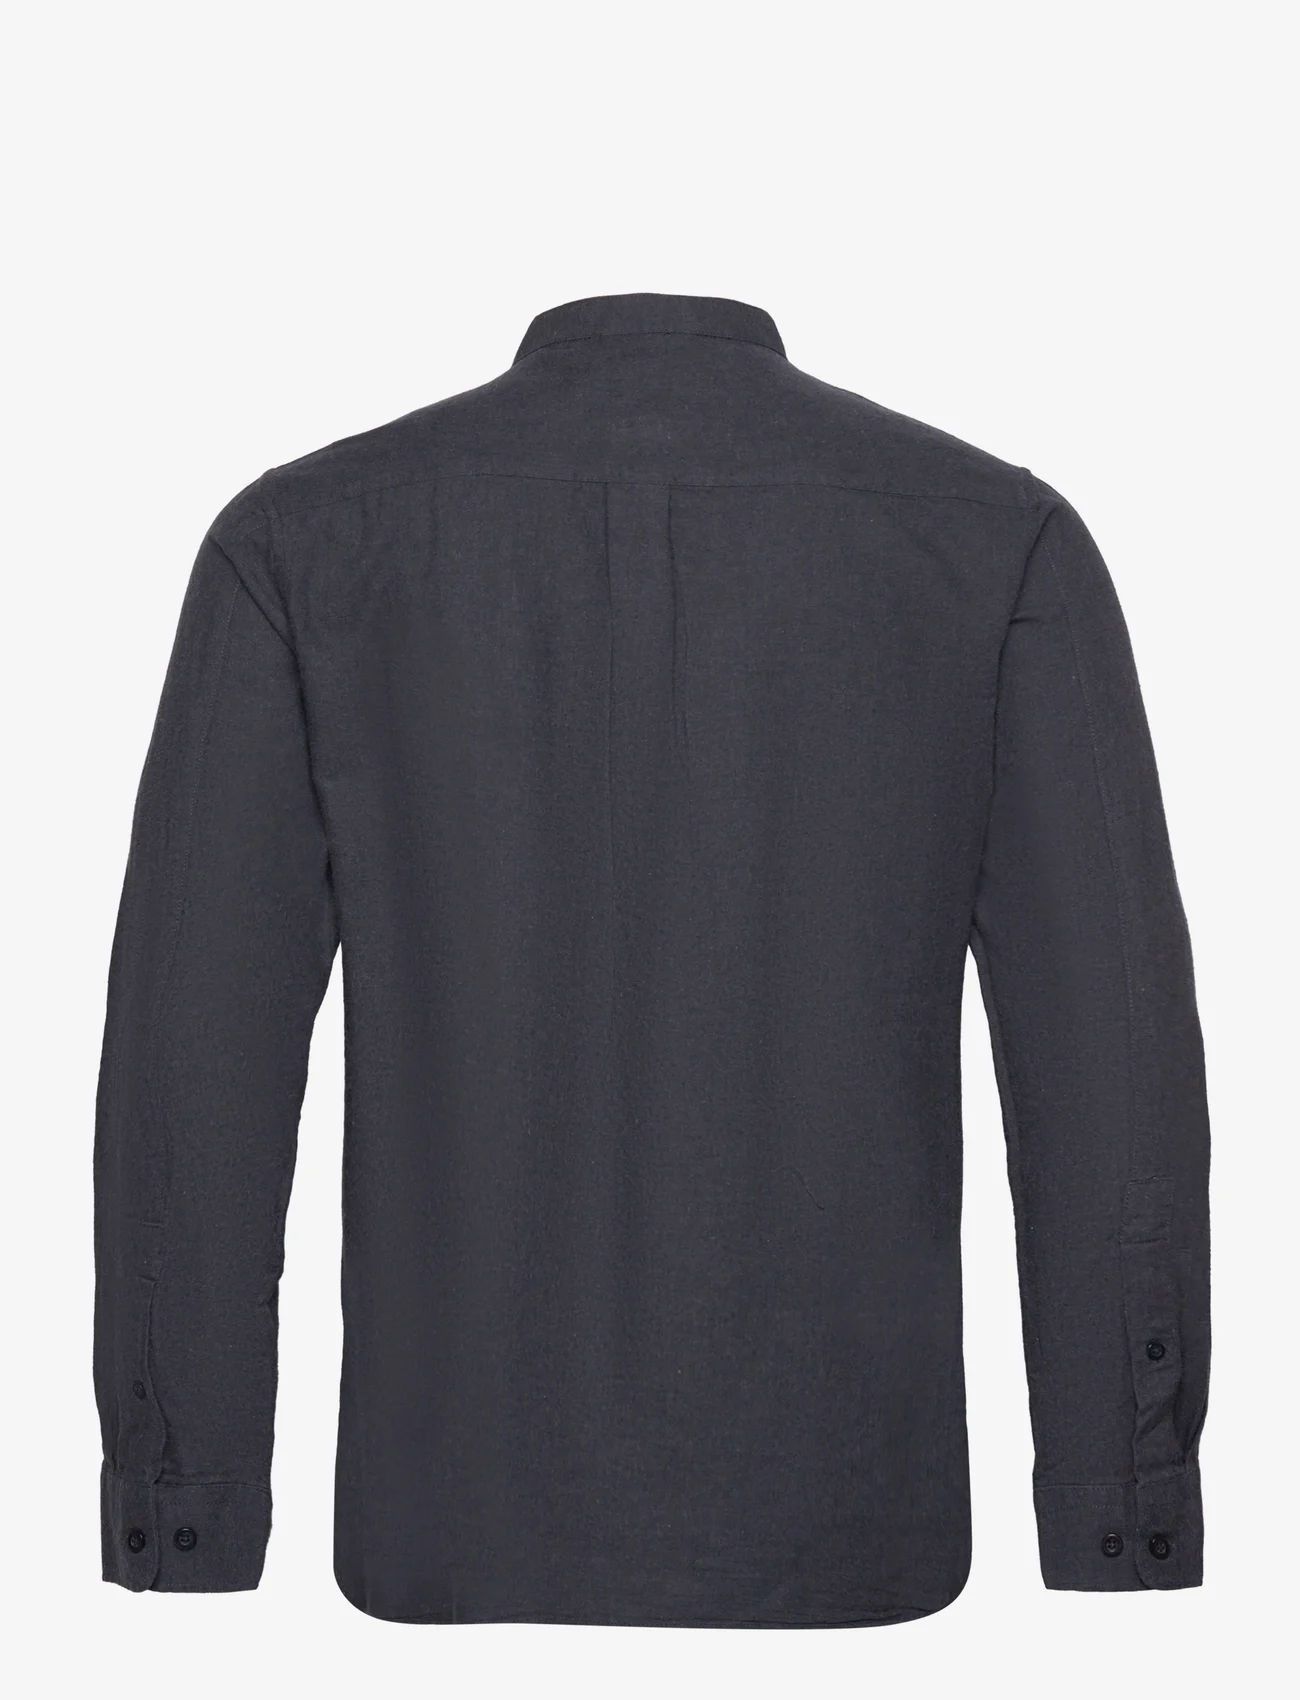 Knowledge Cotton Apparel - Regular fit melangé flannel stand c - basic shirts - total eclipse - 1